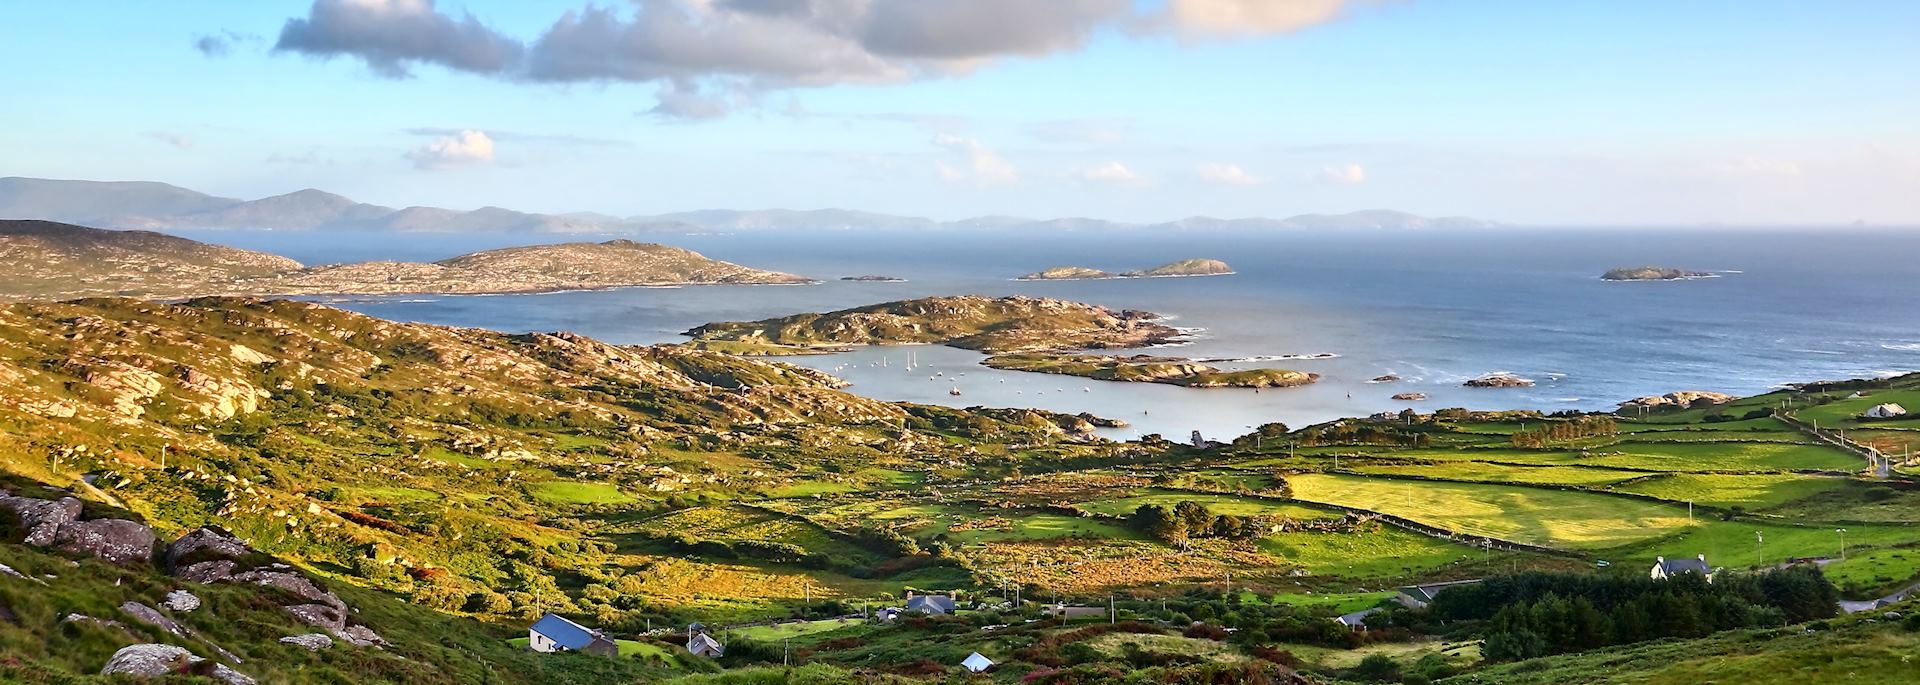 Ring of Kerry coastline, Ireland